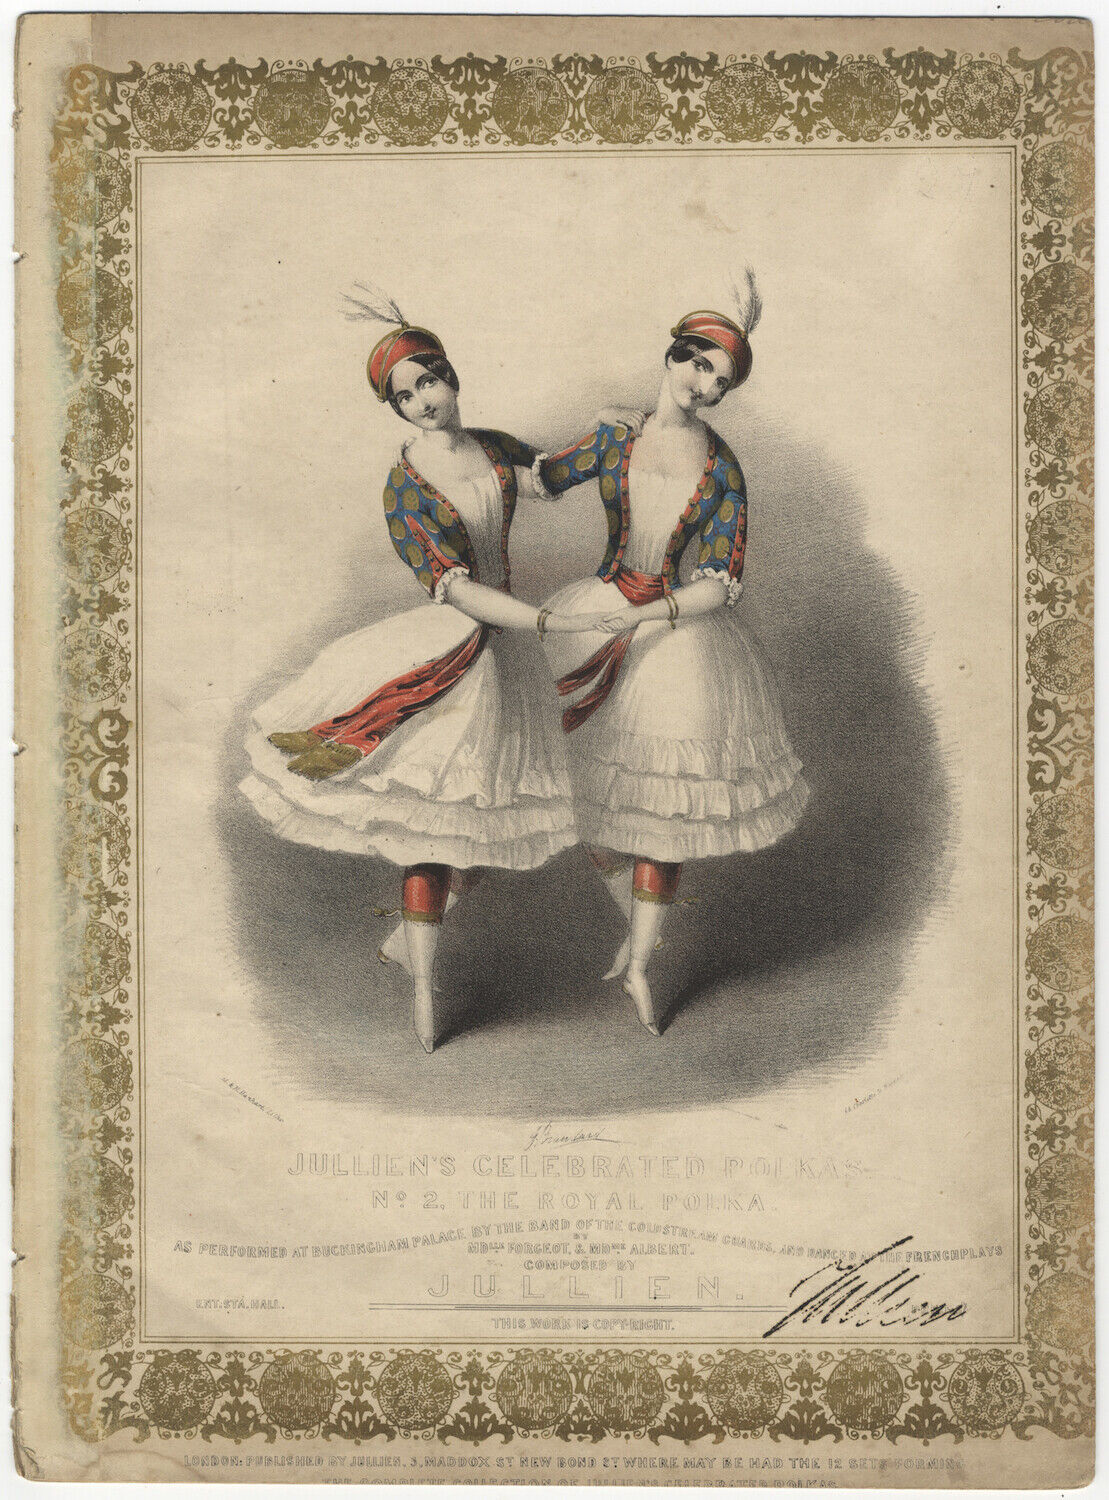 Dance Social / Jullien's Celebrated Polkas No 2 The Royal Polka As Signed 1843